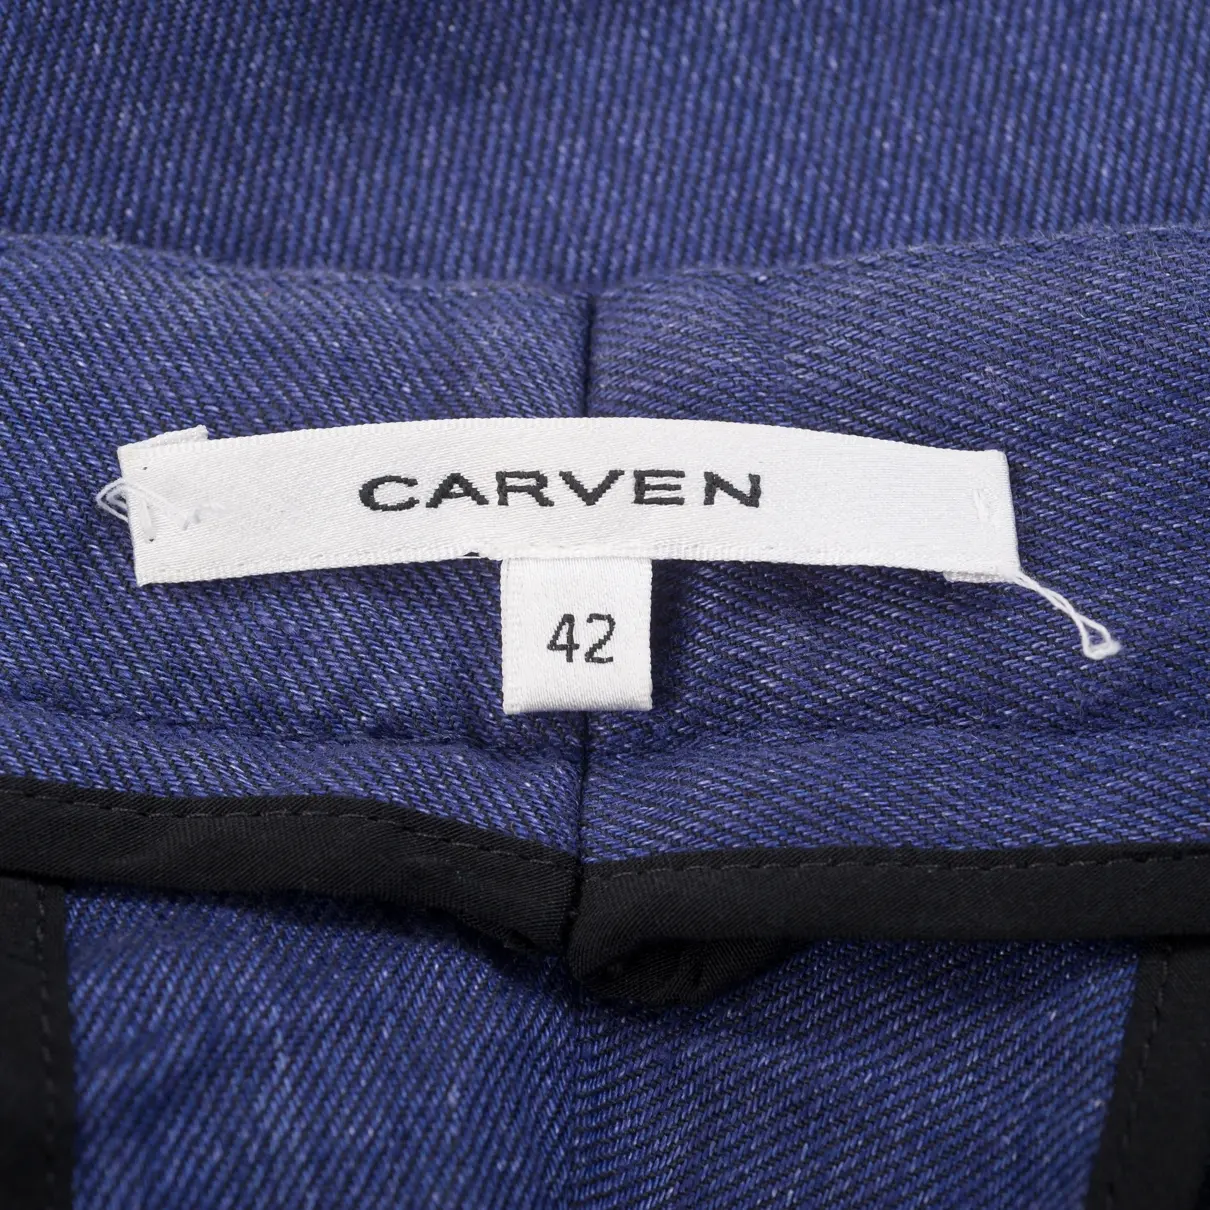 Buy Carven Pants online